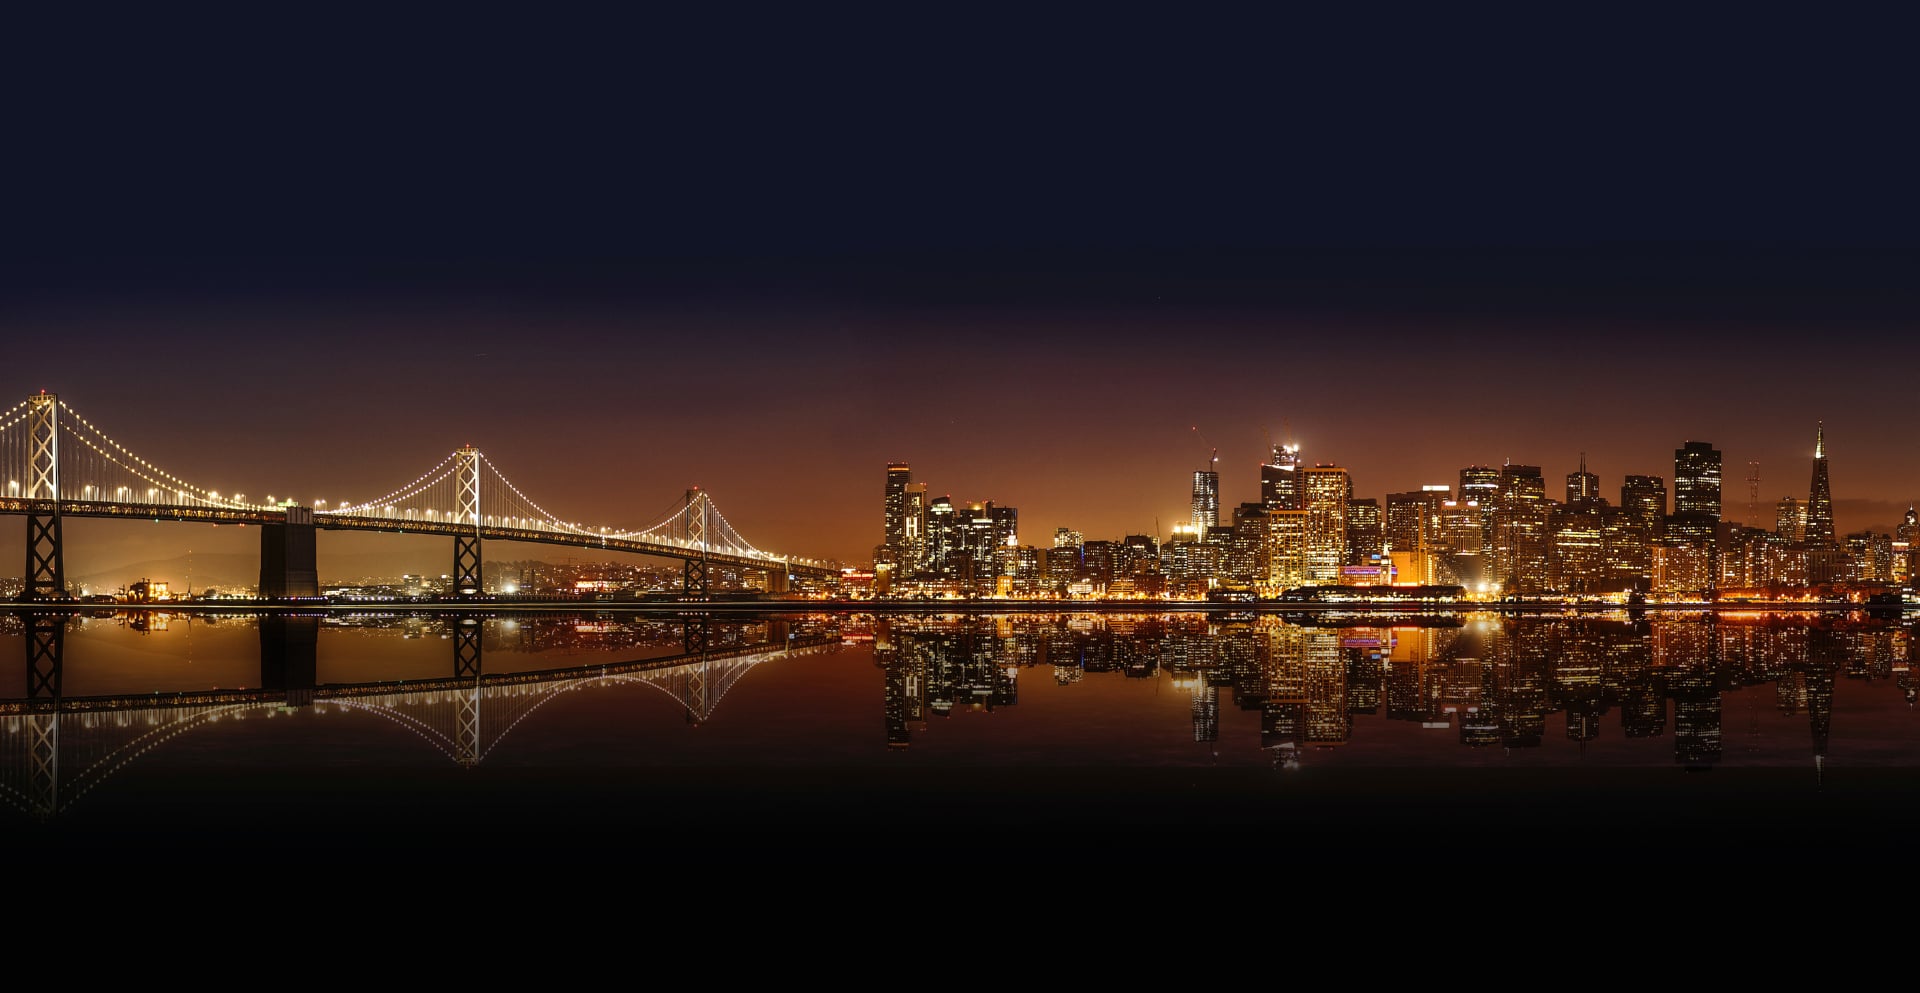 San Francisco-Oakland Bay Bridge at 1024 x 1024 iPad size wallpapers HD quality